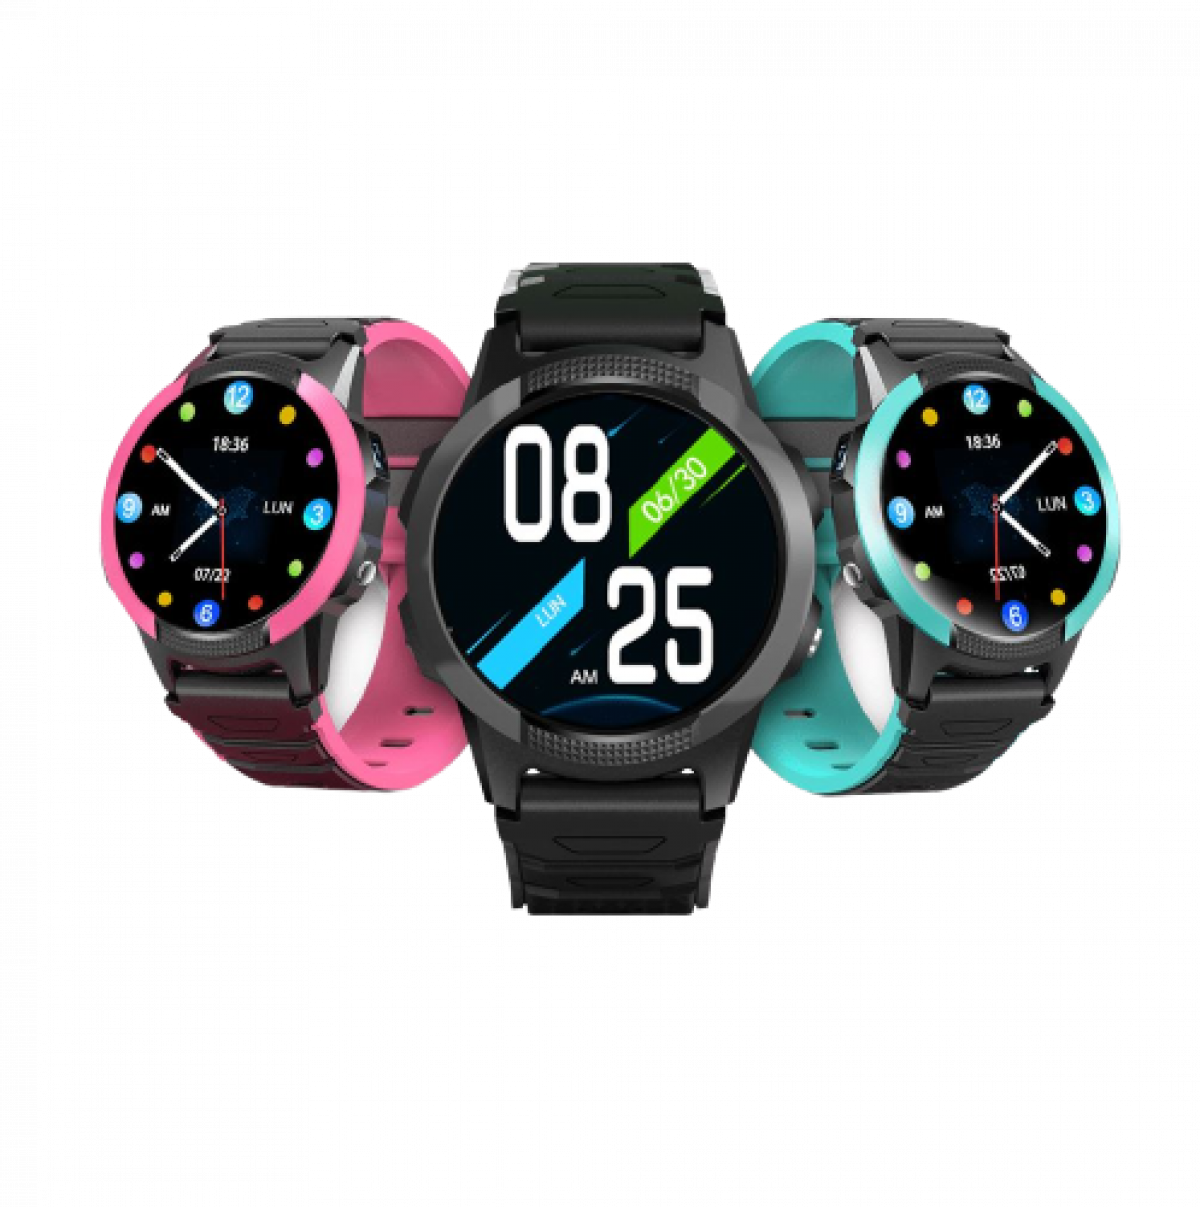 Smartwatch - SAVEFAMILY Iconic+ 4G, Azul